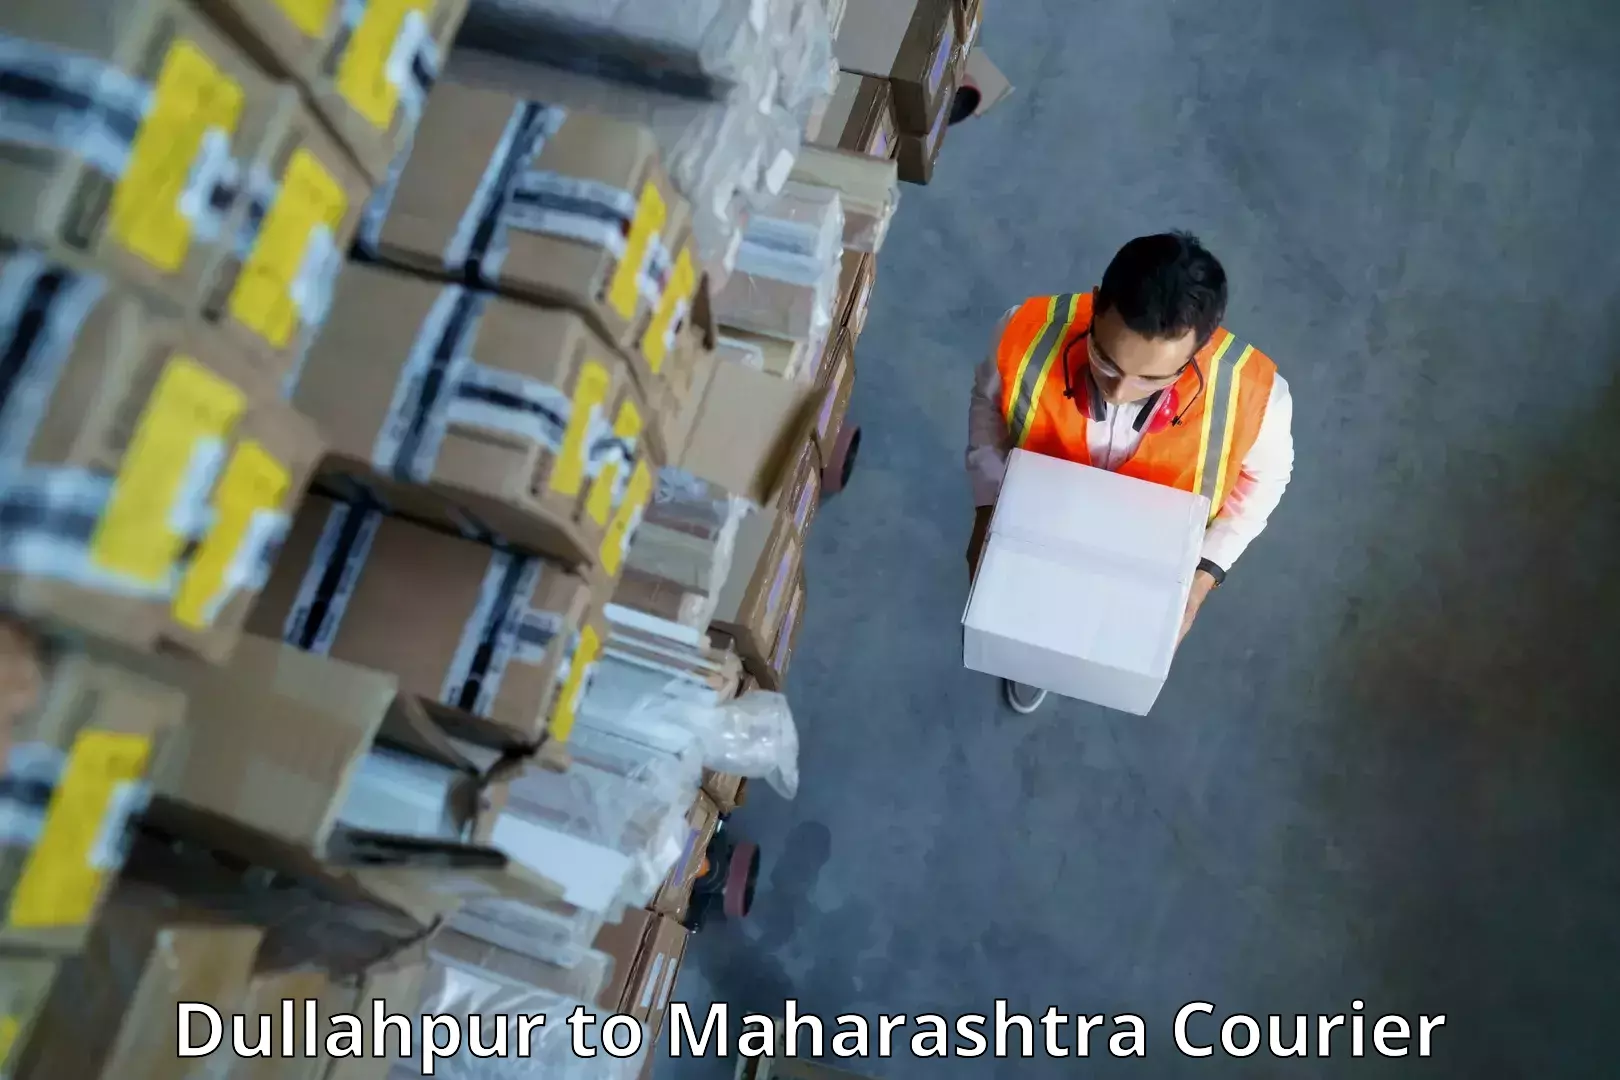 Global shipping networks in Dullahpur to Nashik